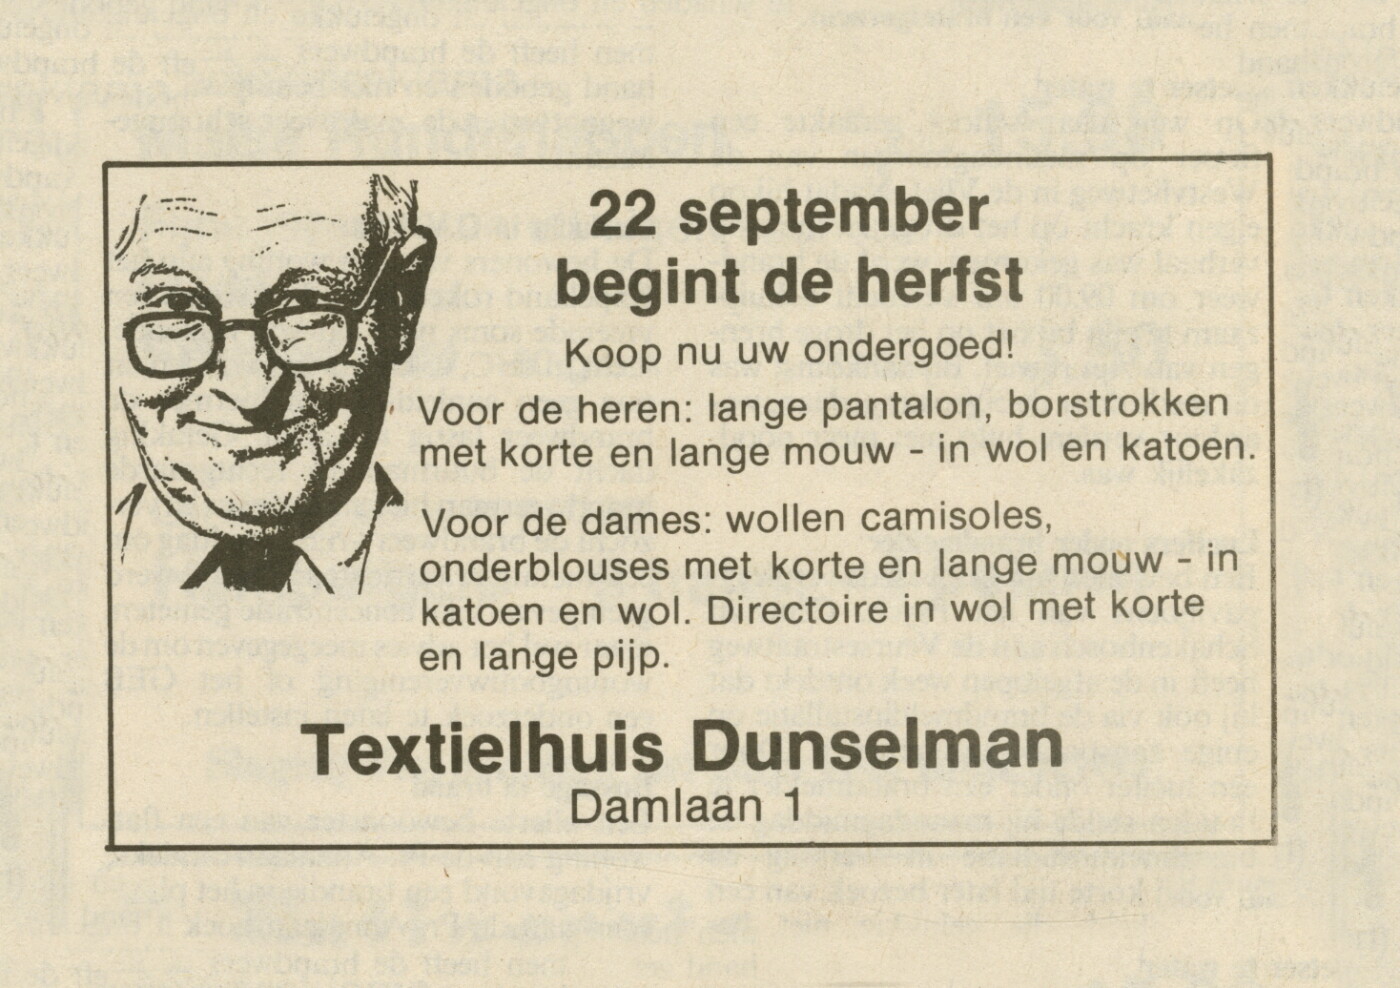 ai-advertentie-dunselman-krantje-15-sept-1988-jpeg-pix-1400.jpg